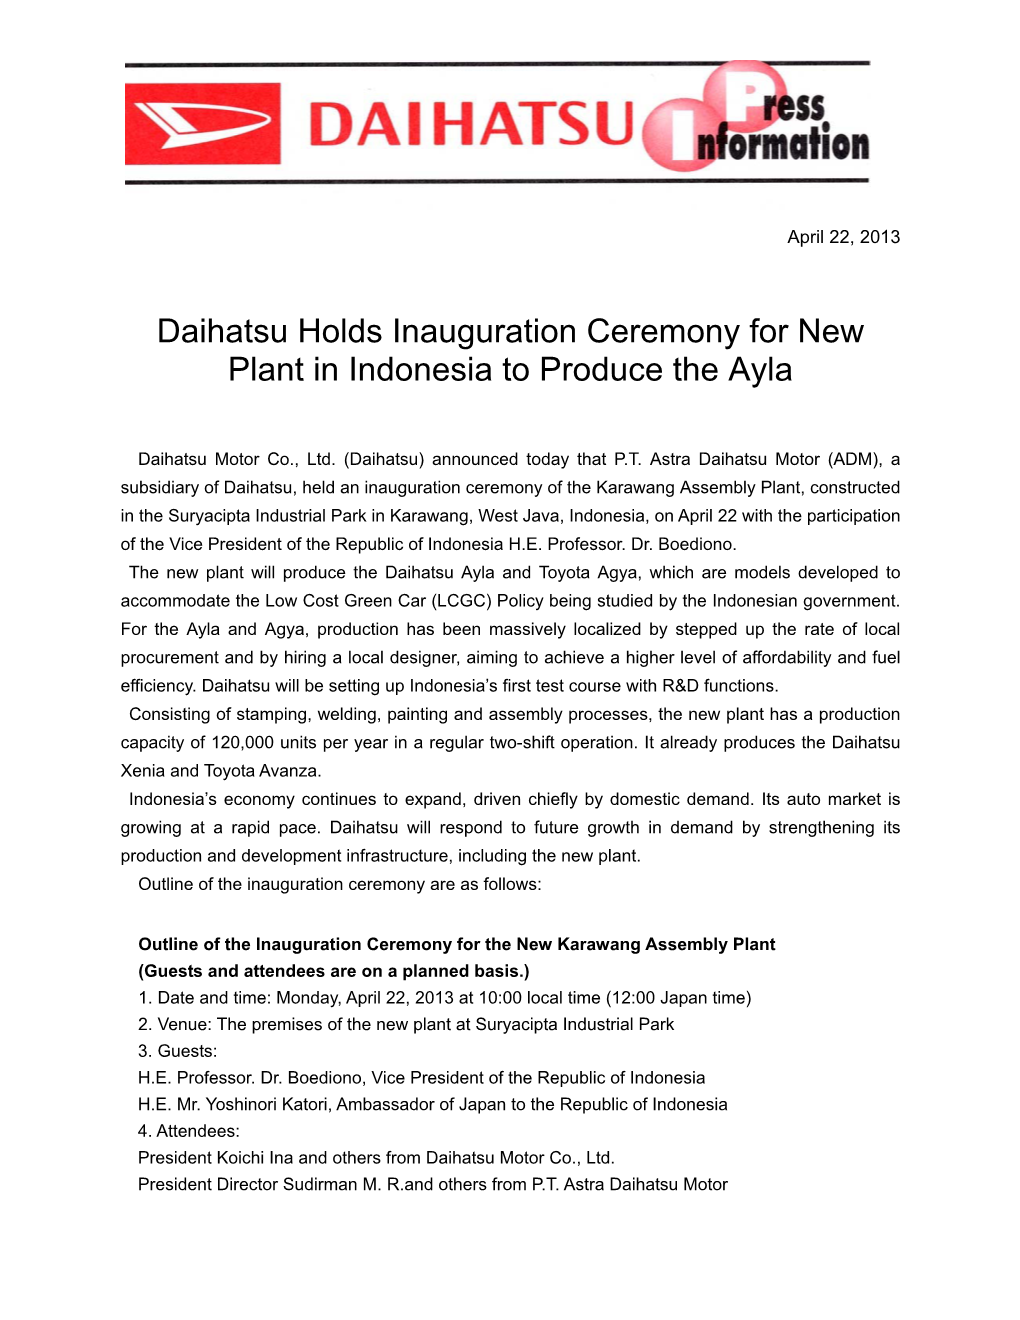 Apr. 22, 2013 Overseas Daihatsu Holds Inauguration Ceremony For